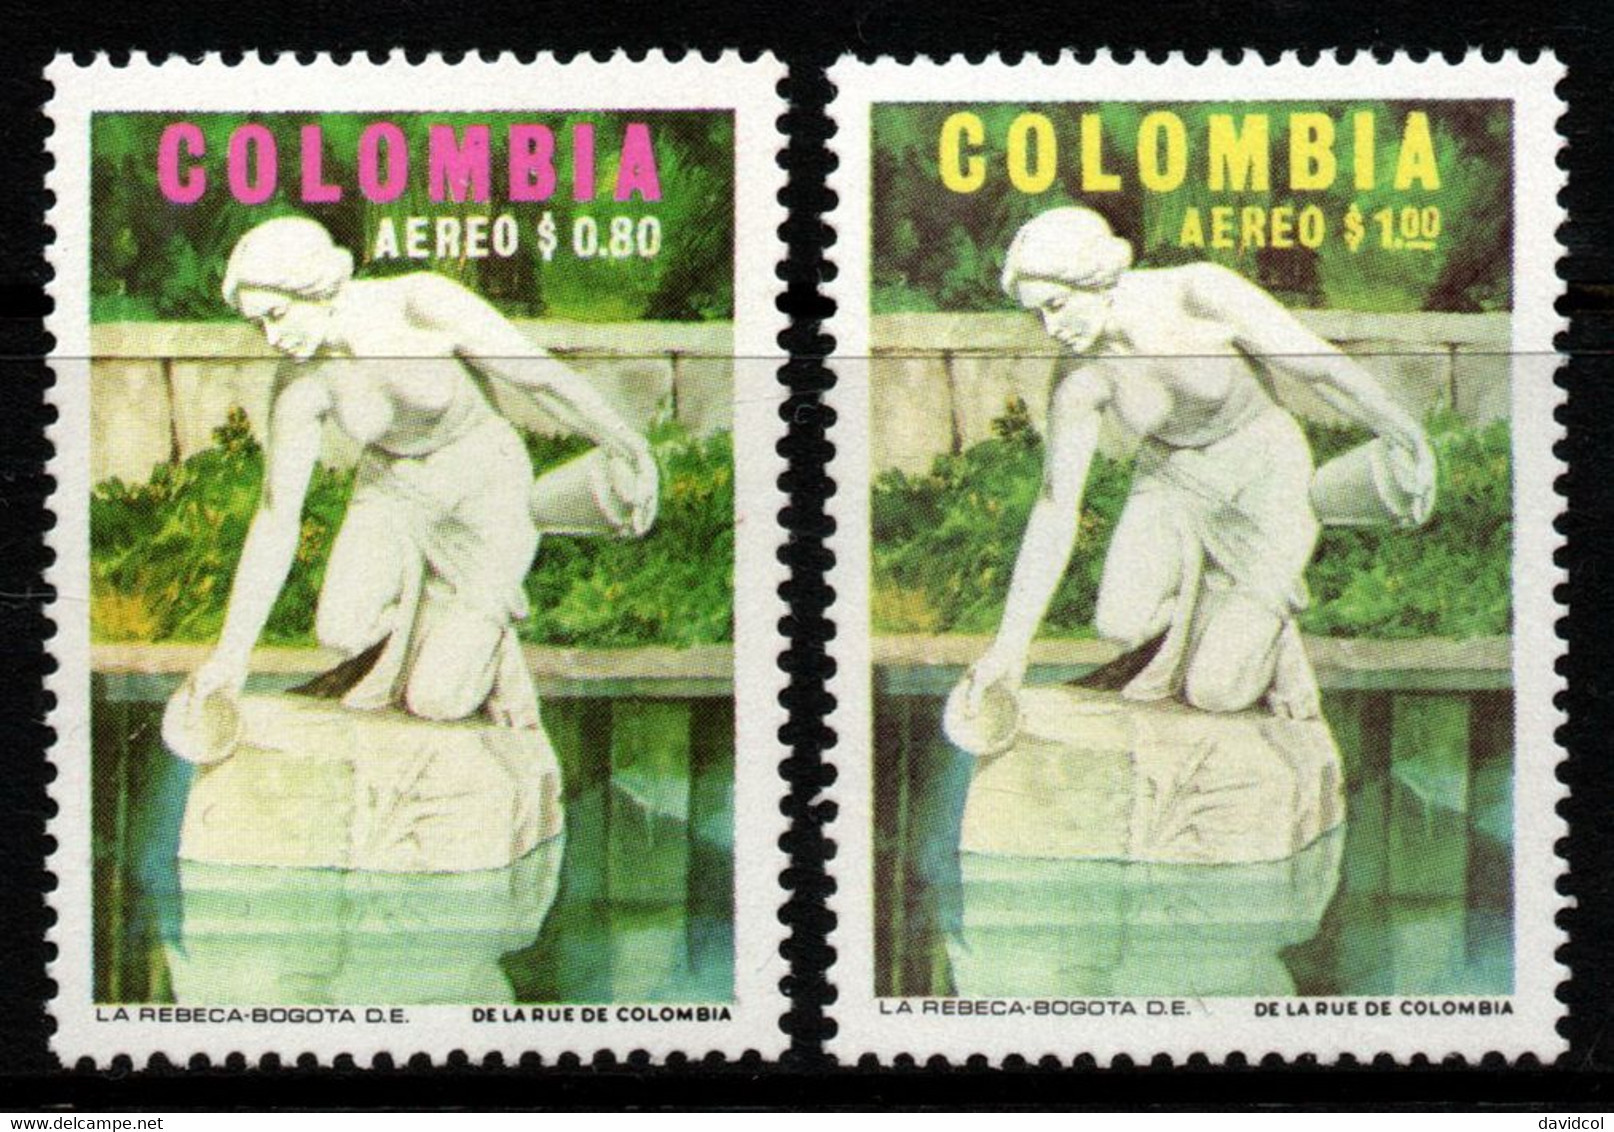 20- KOLUMBIEN - 1972- MI#:1240-1241 - MNH- “REBECA” MONUMENT IN BOGOTA - Kolumbien